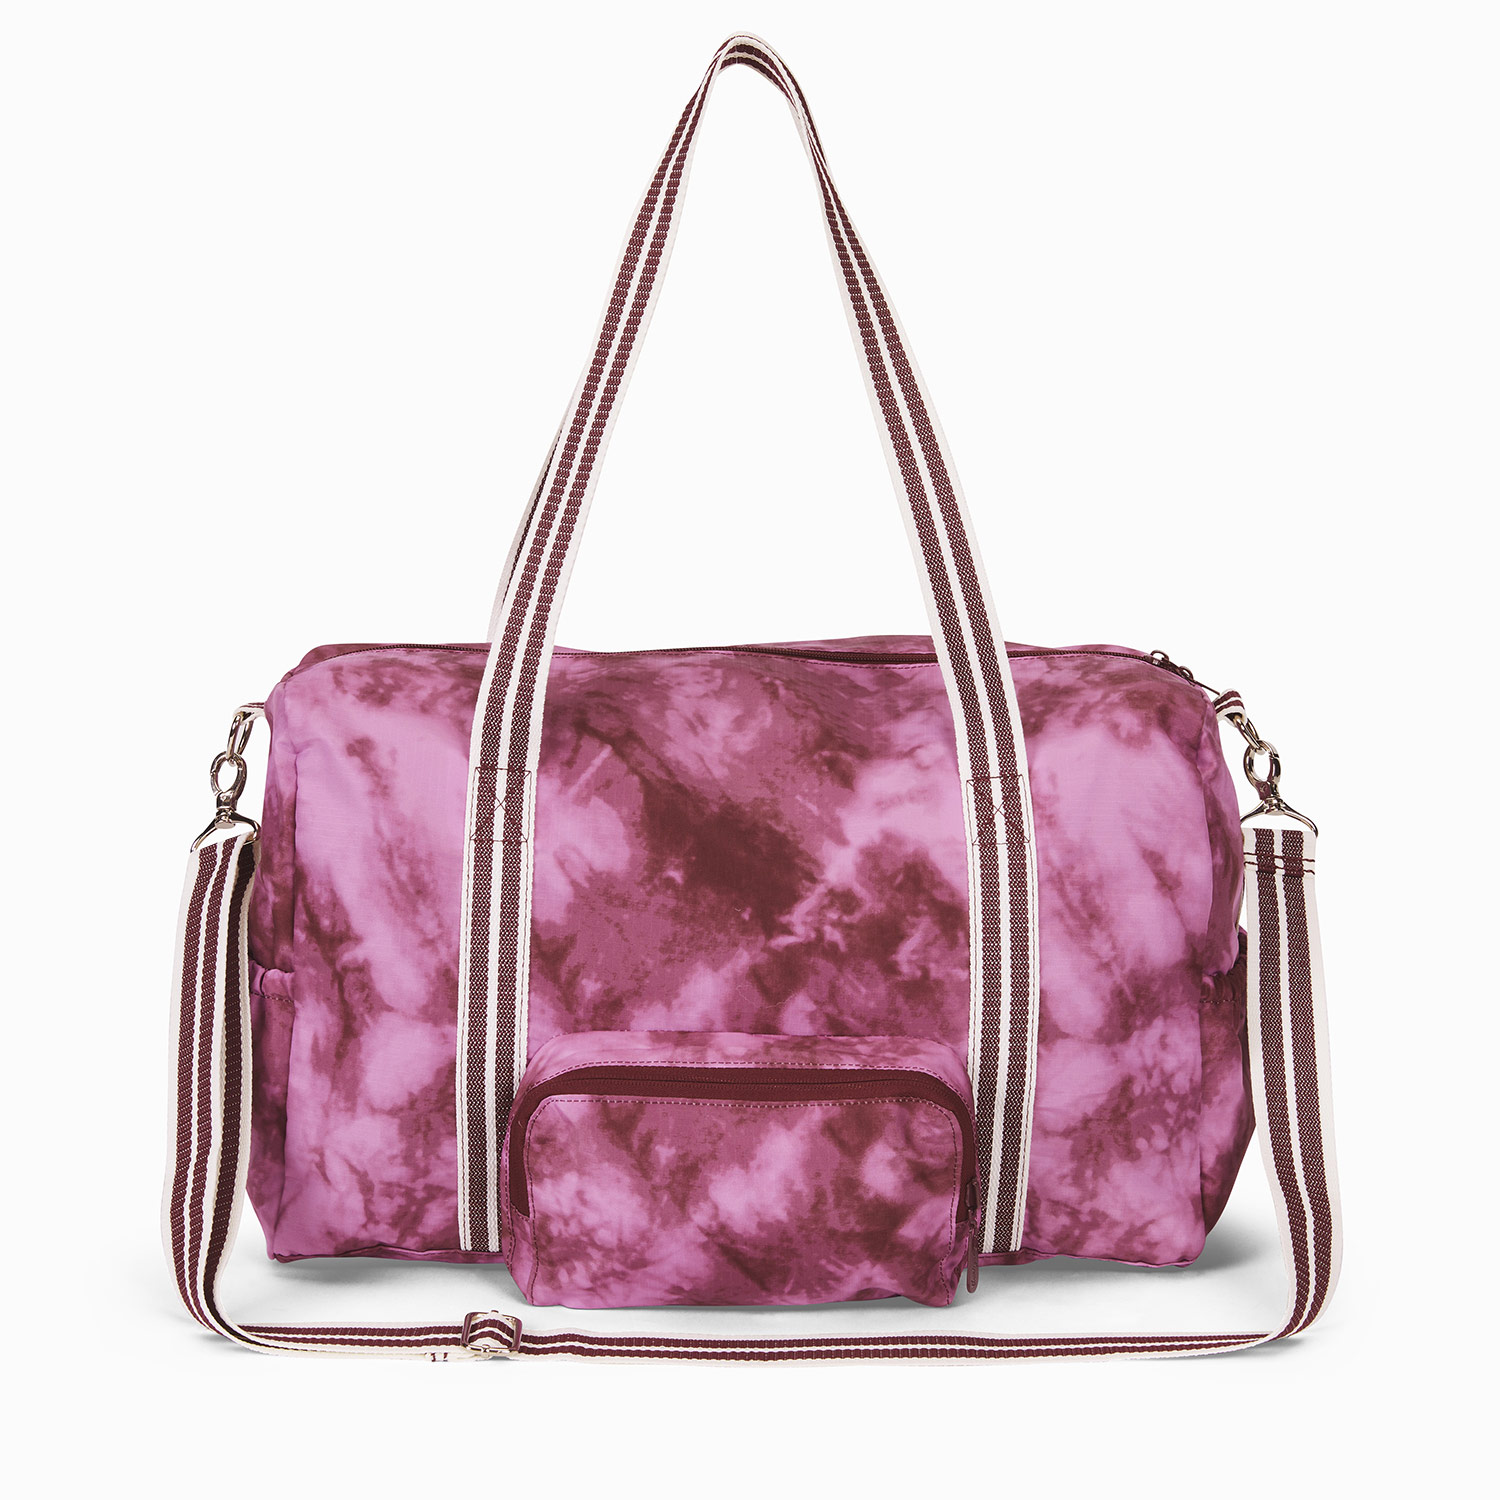 Update on handbag advice for my mom! : r/handbags